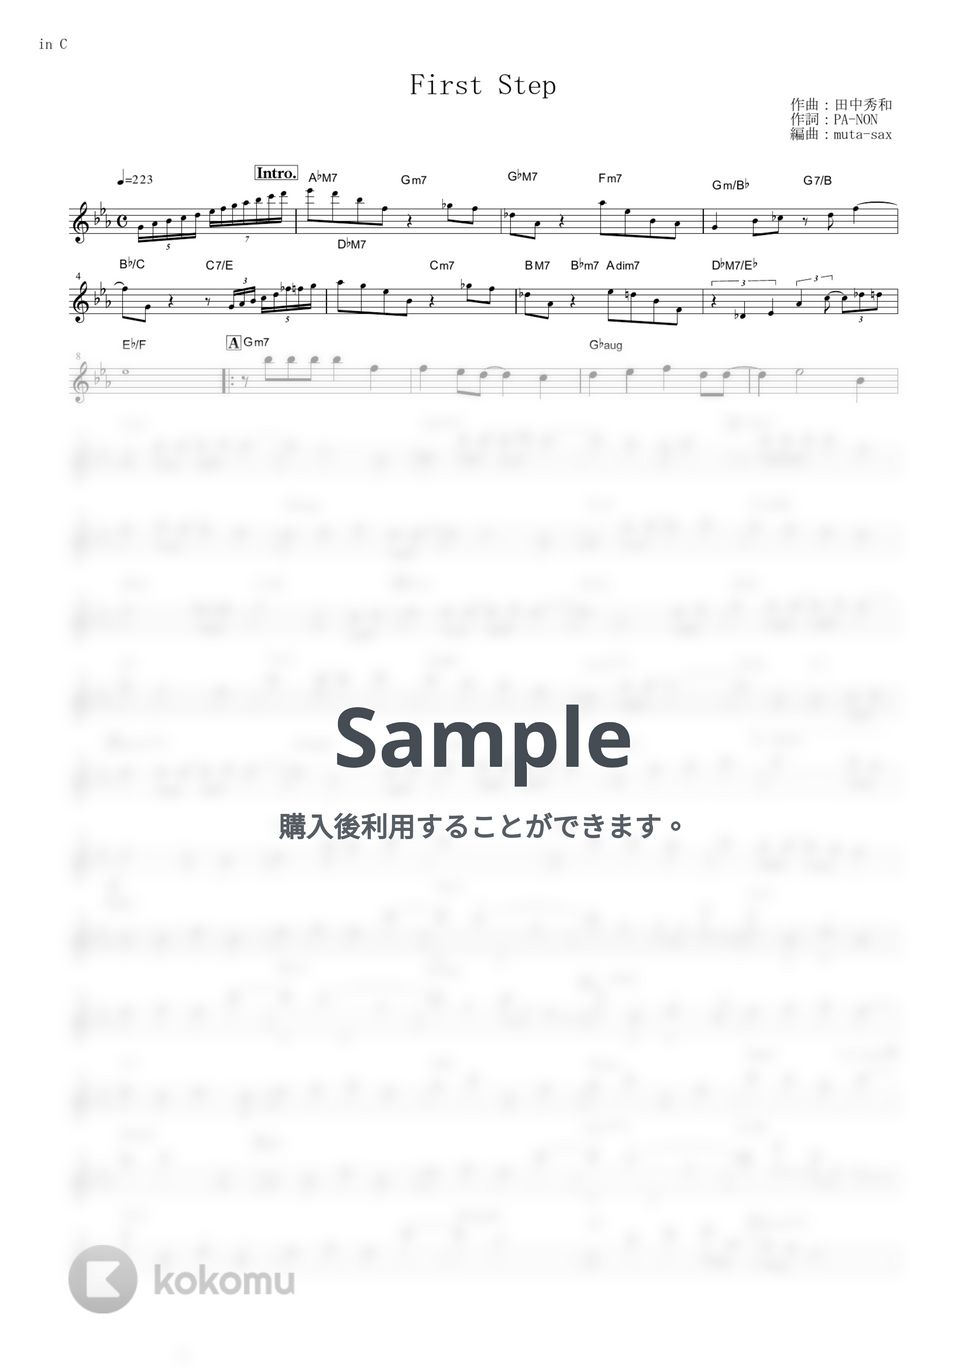 長瀬麻奈（CV:神田沙也加） - First Step (『IDOLY PRIDE』 / in C) by muta-sax